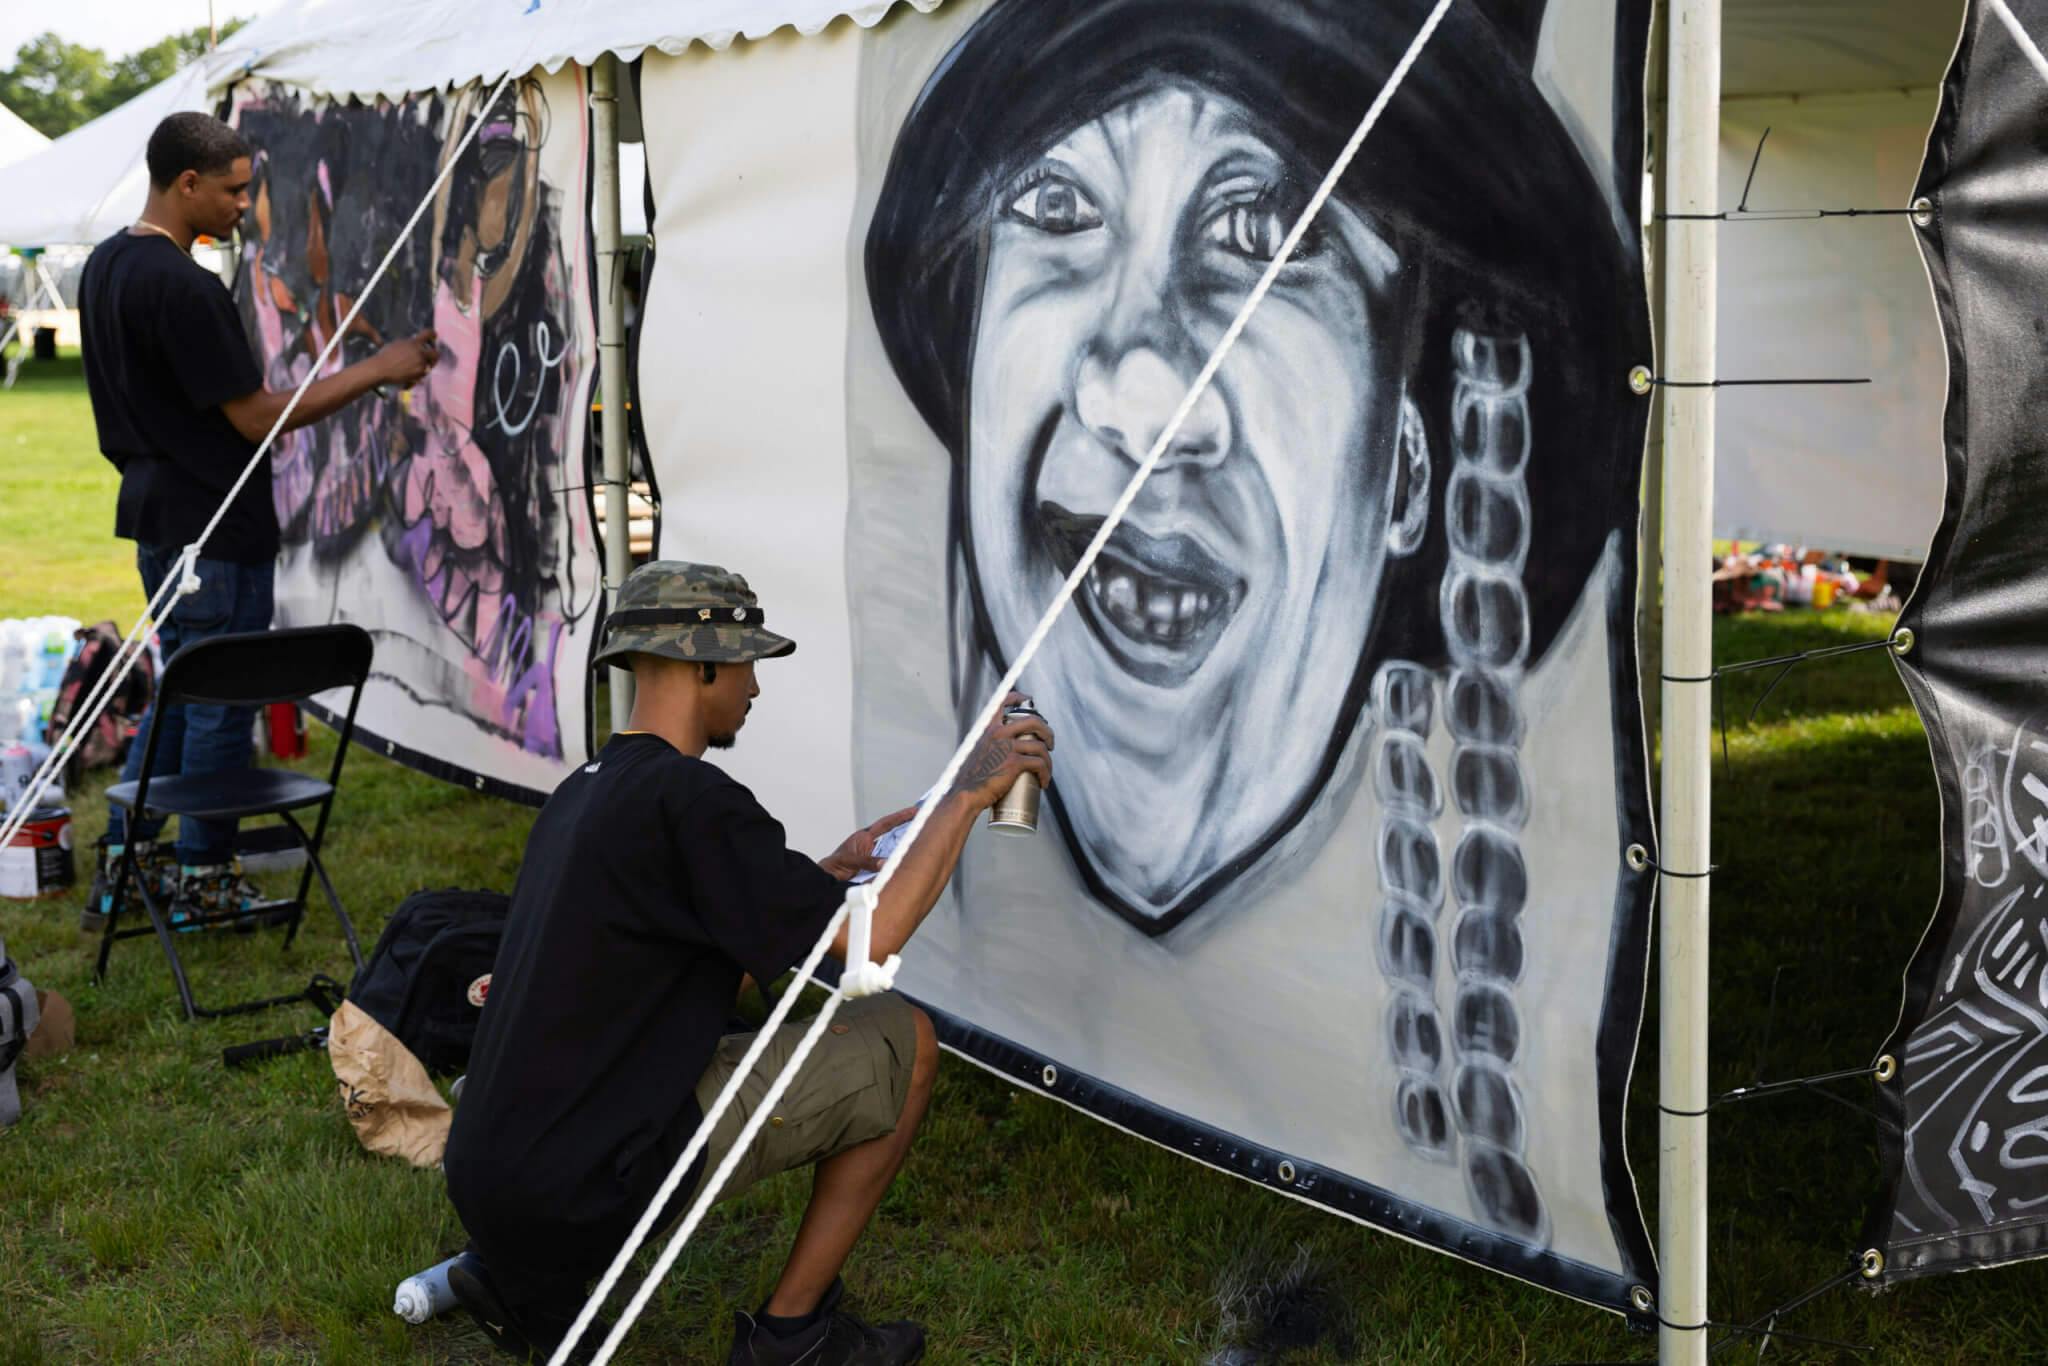 An artist works on a large graffiti mural at BAMS Fest.